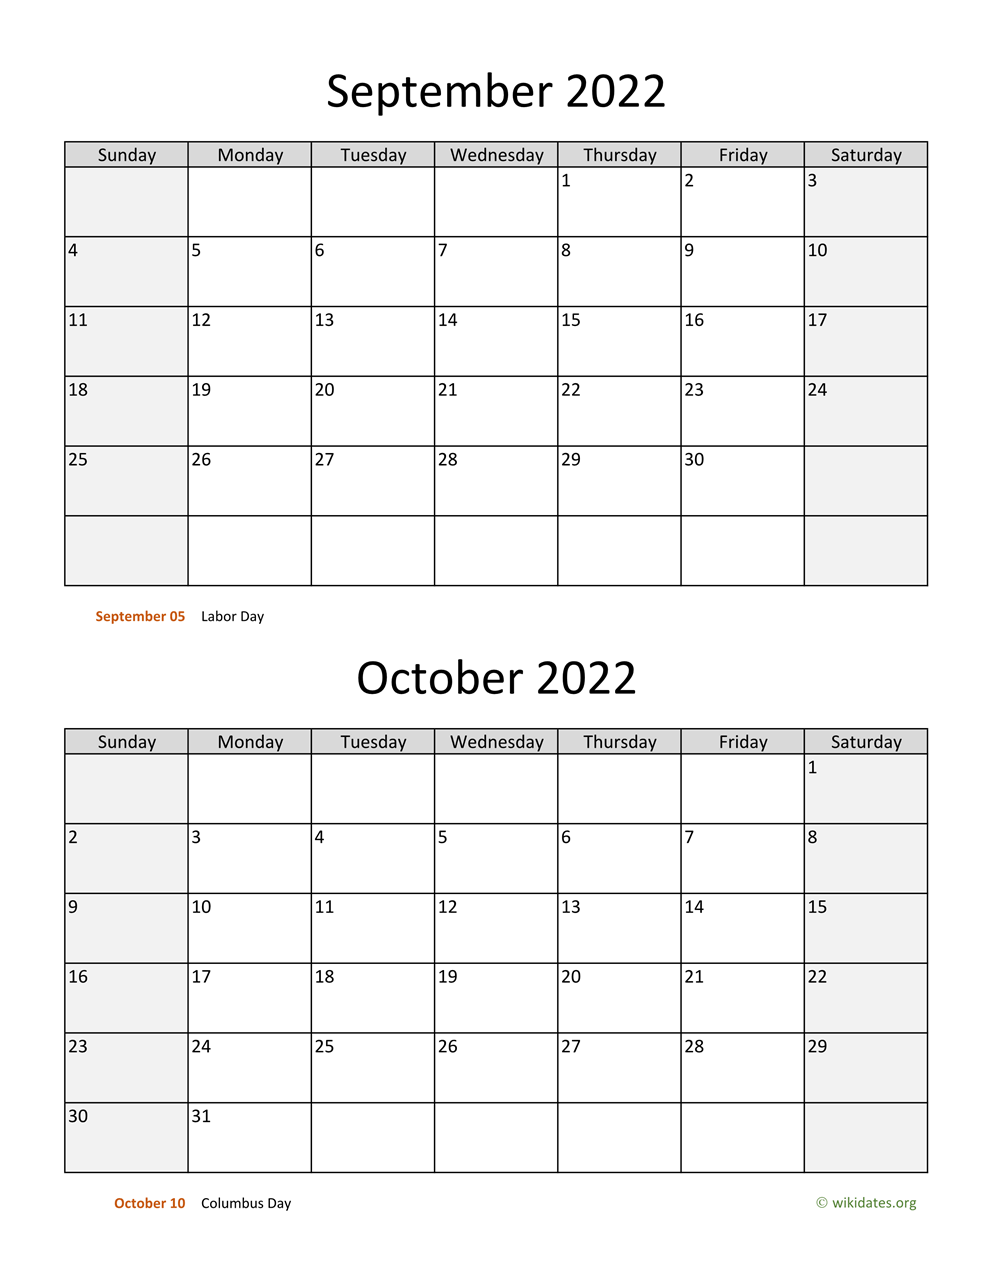 September And October 2022 Calendar Printable September And October 2022 Calendar | Wikidates.org